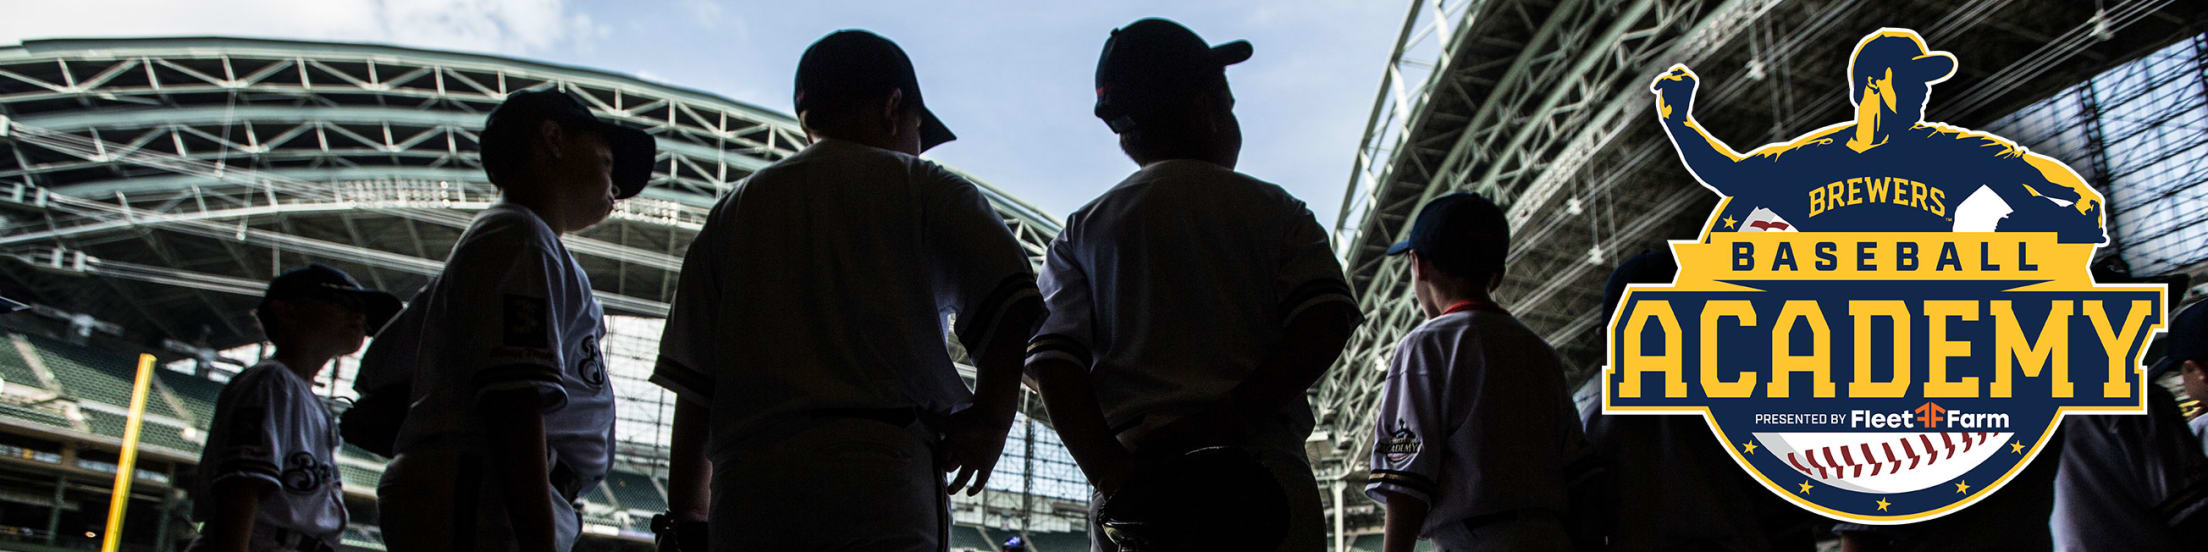 Brewers Baseball Academy: Saying Goodbye to 2014